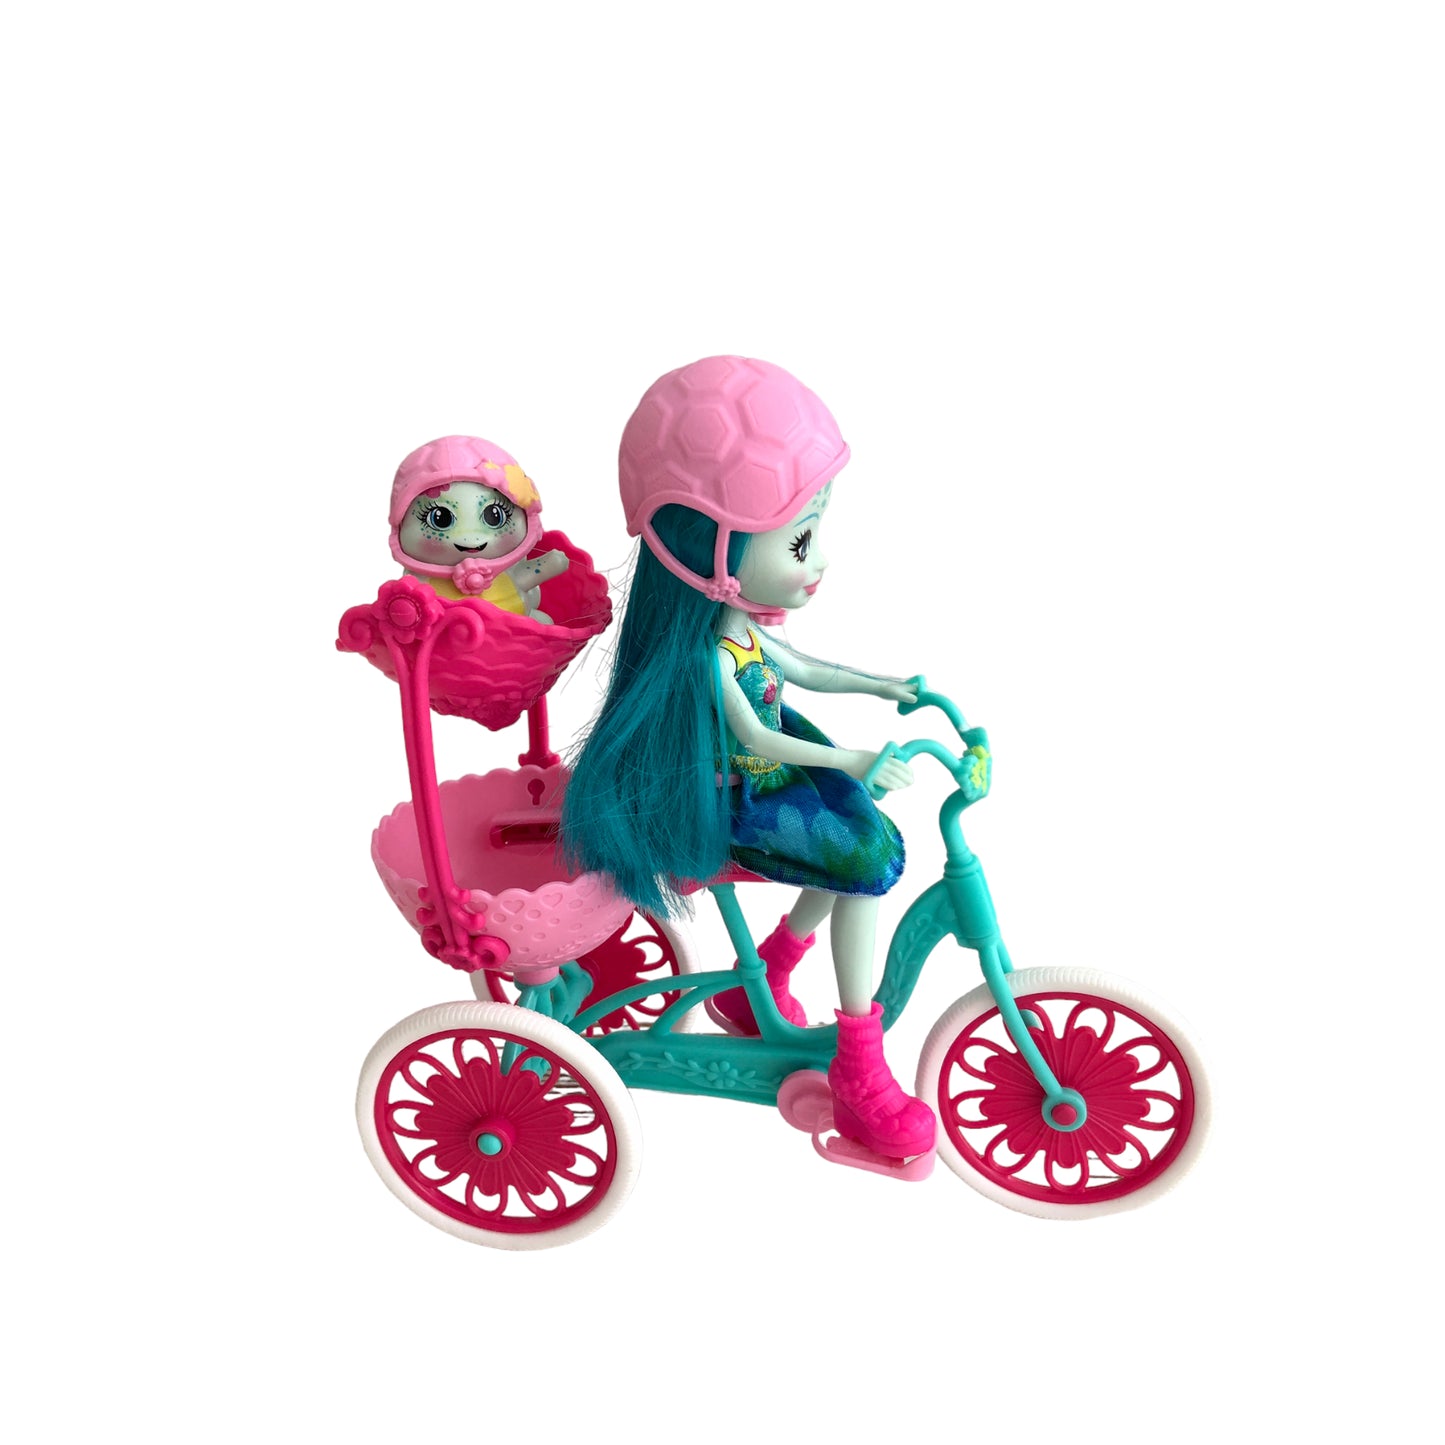 Enchantimals Playset - Together on the Bike